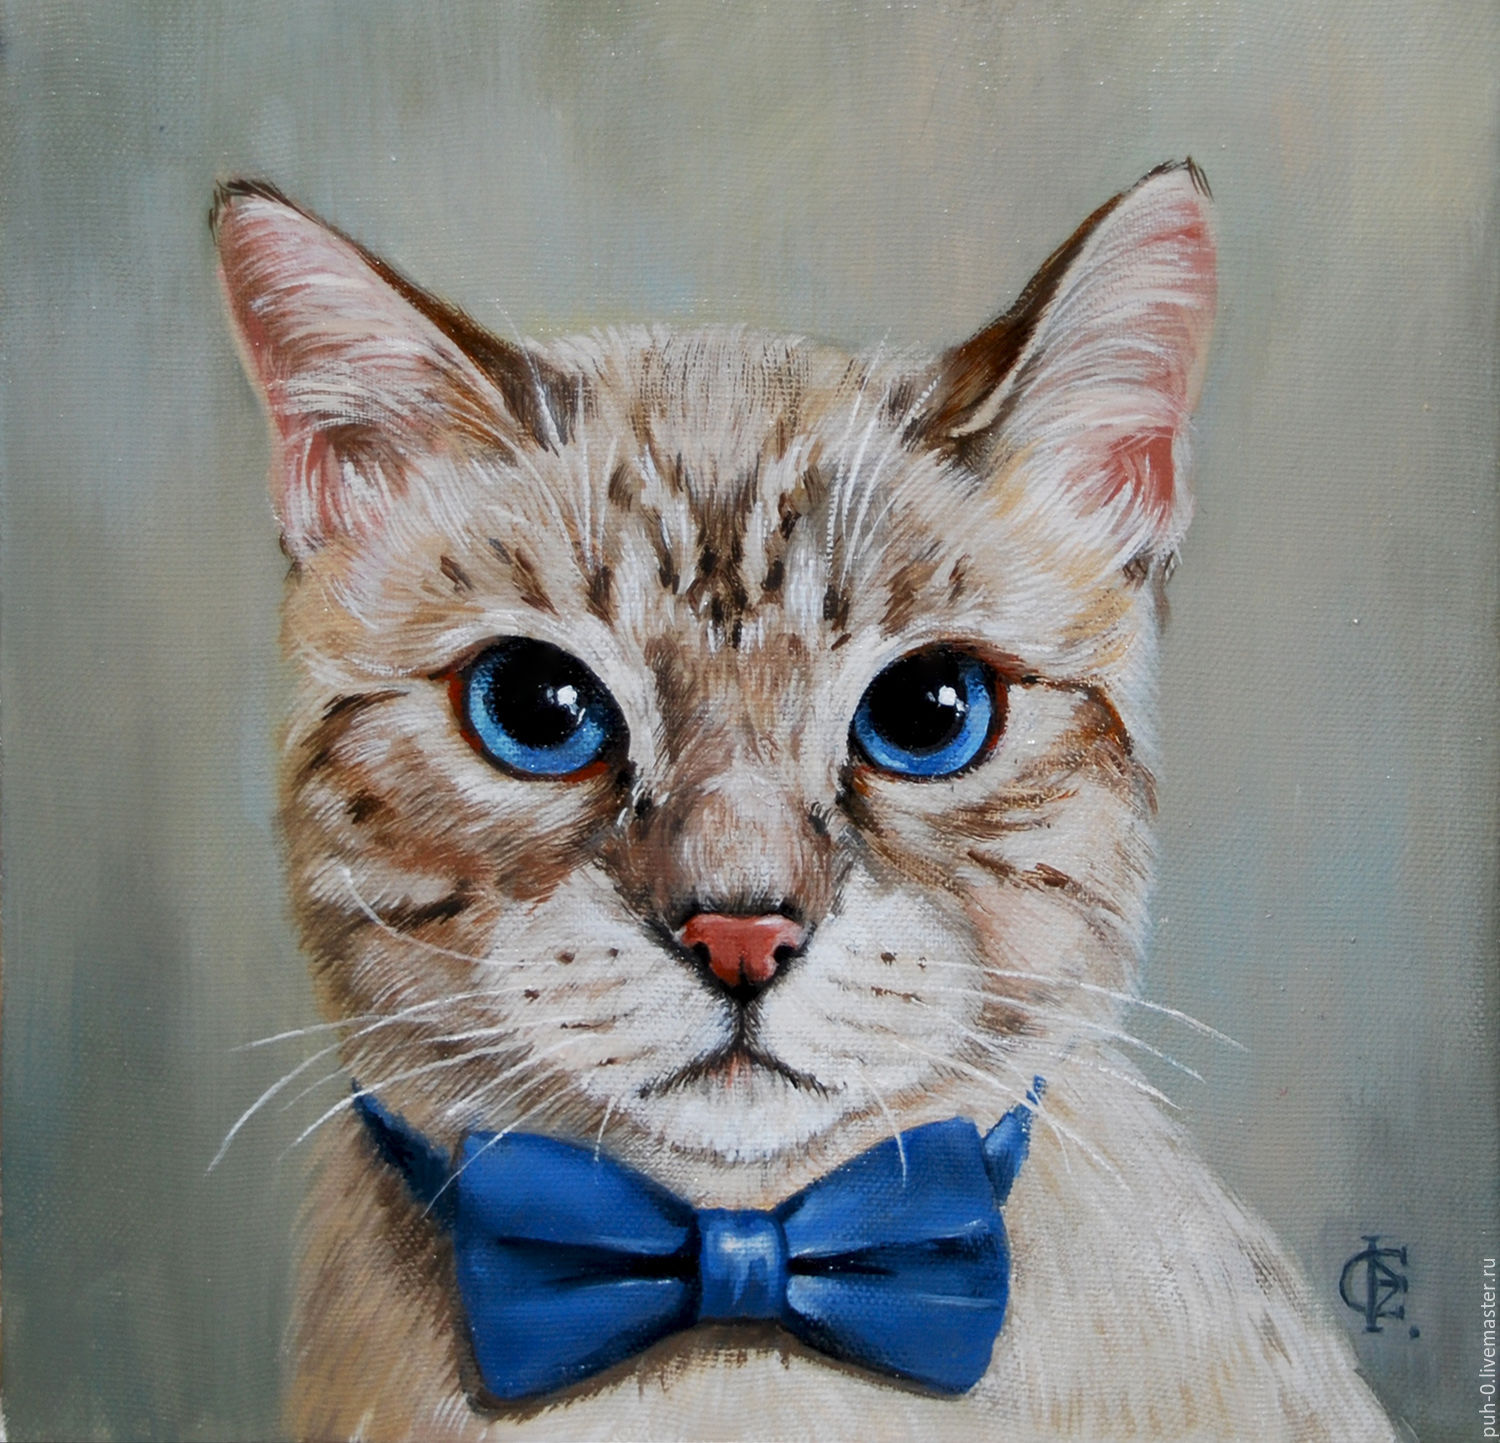 Ошейник галстук бабочка смокинг для кошек собак котят котов